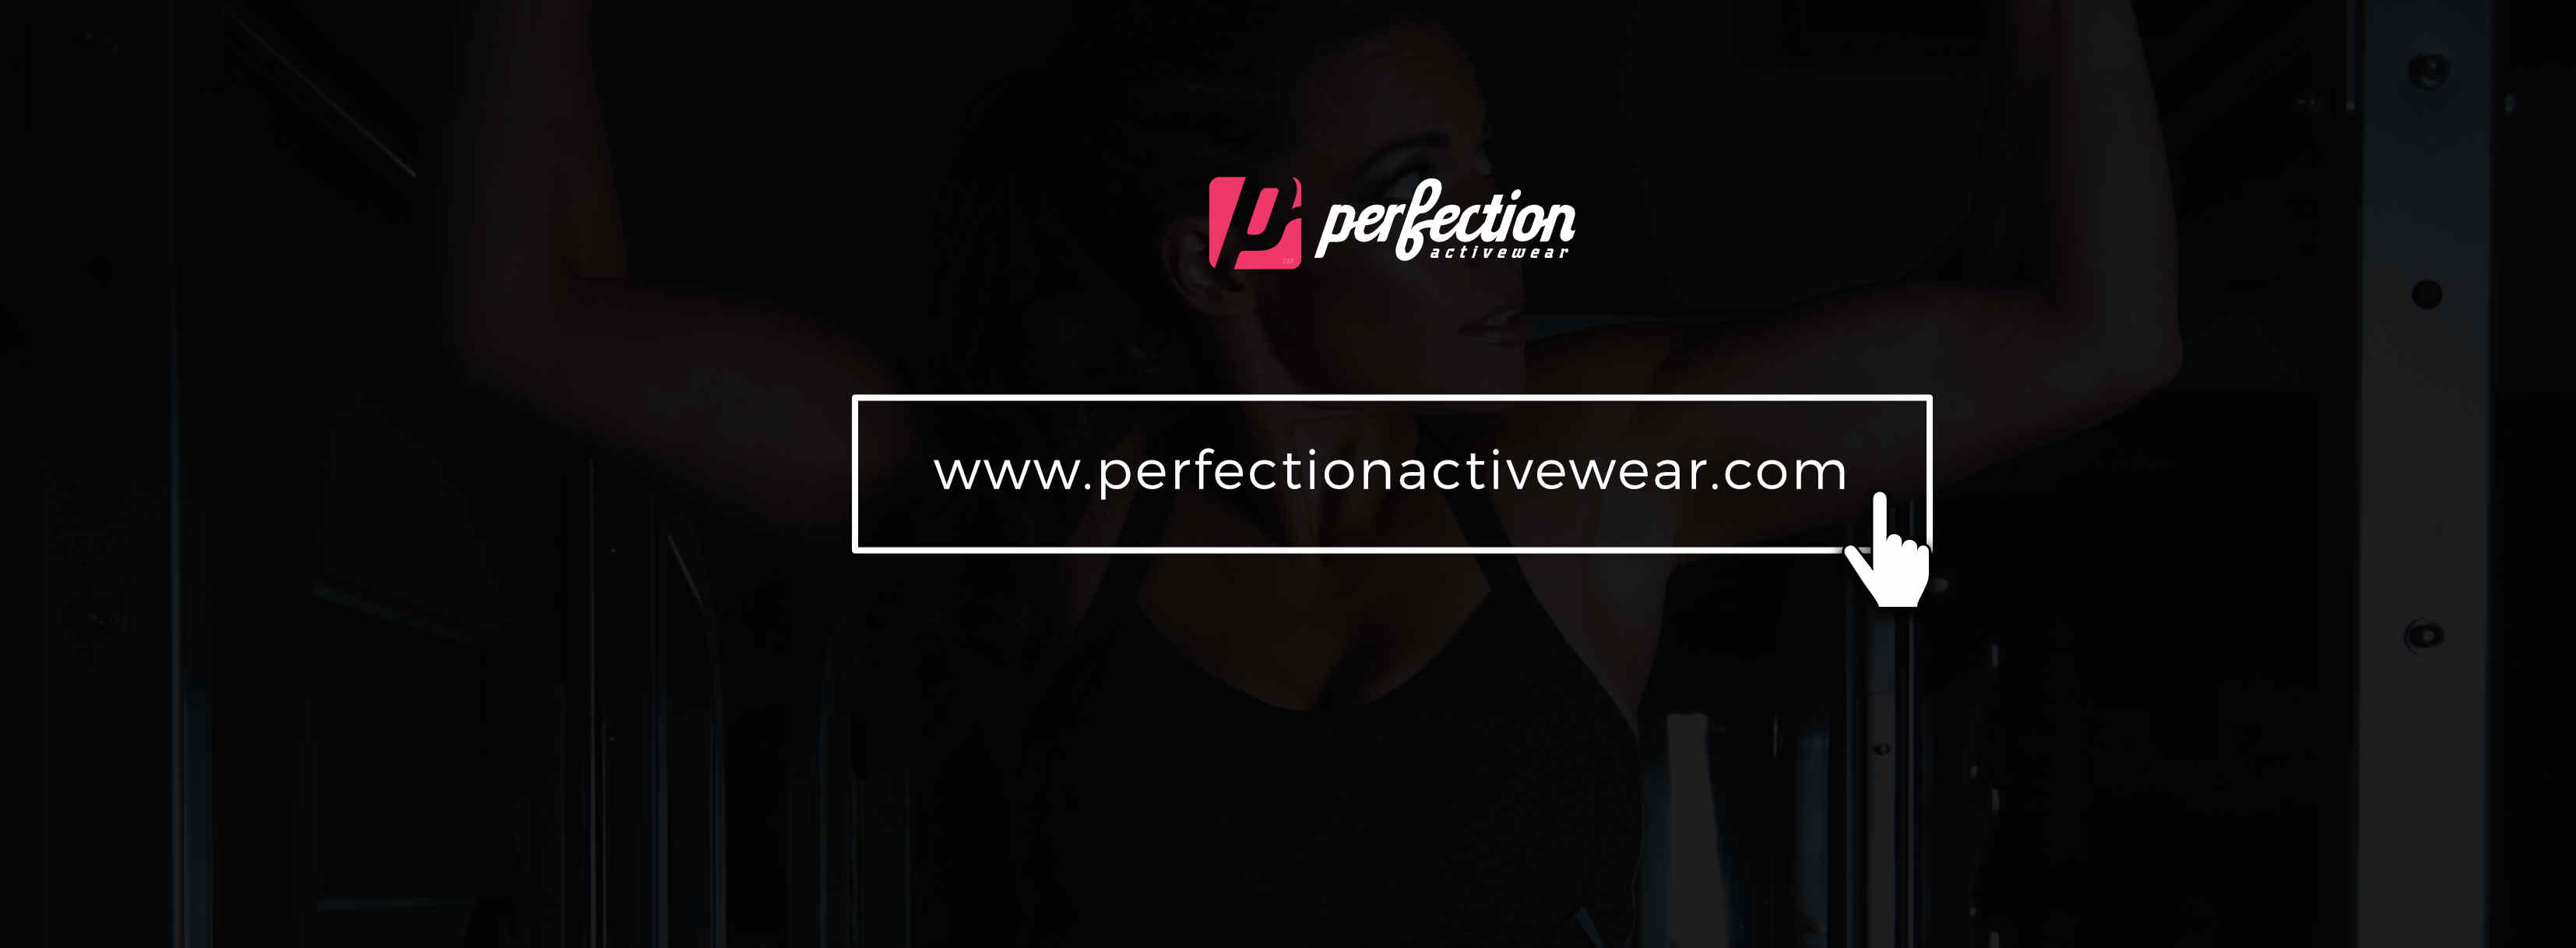 www.perfectionactivewear.com